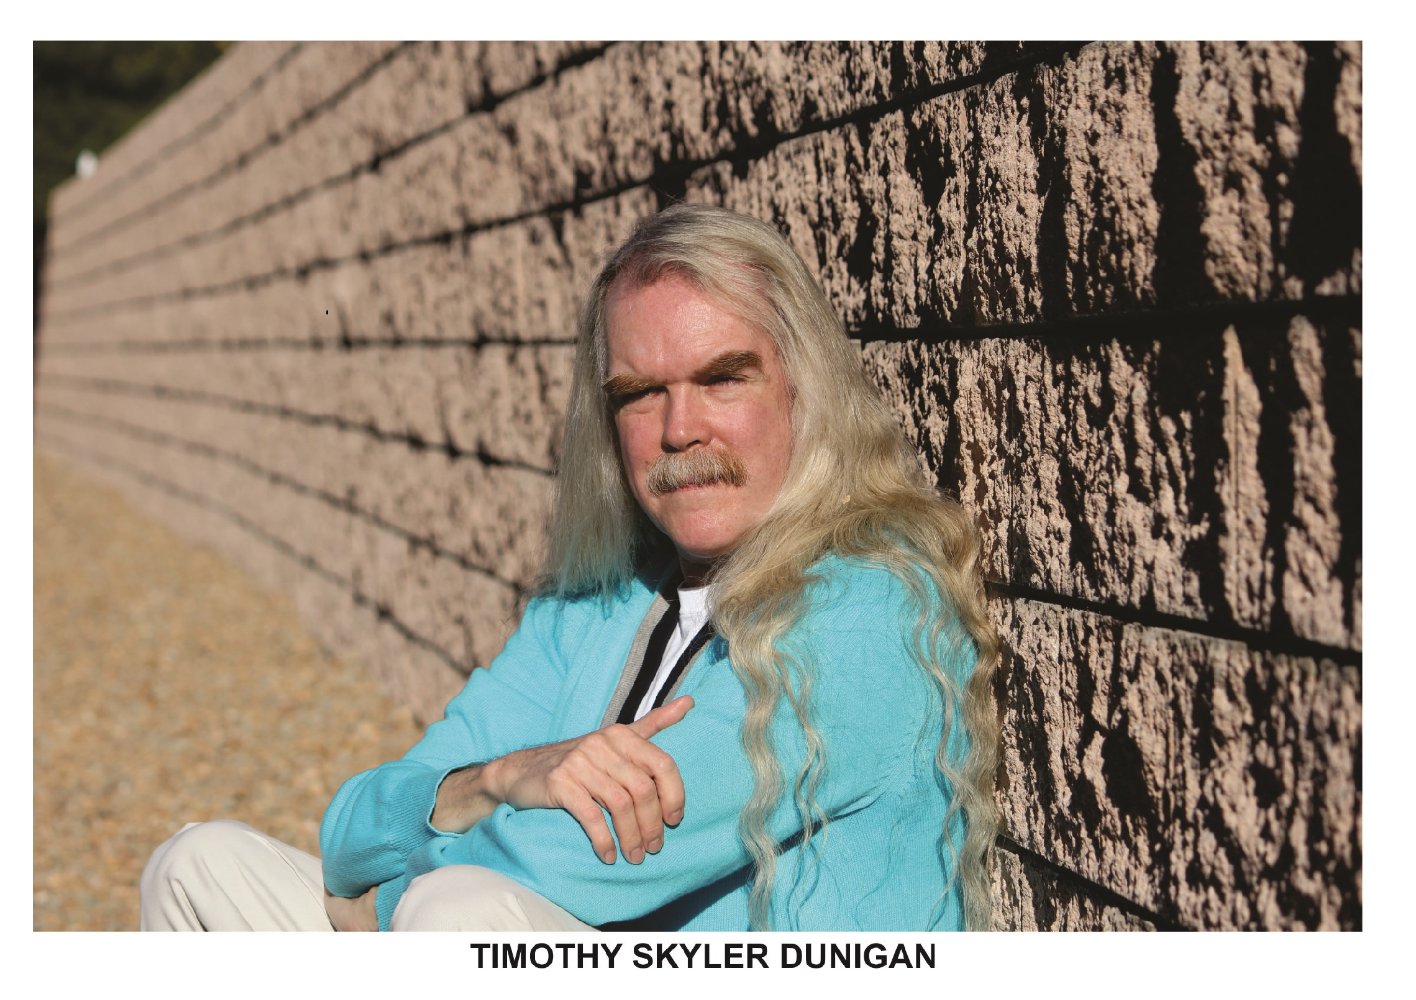 Timothy Skyler Dunigan